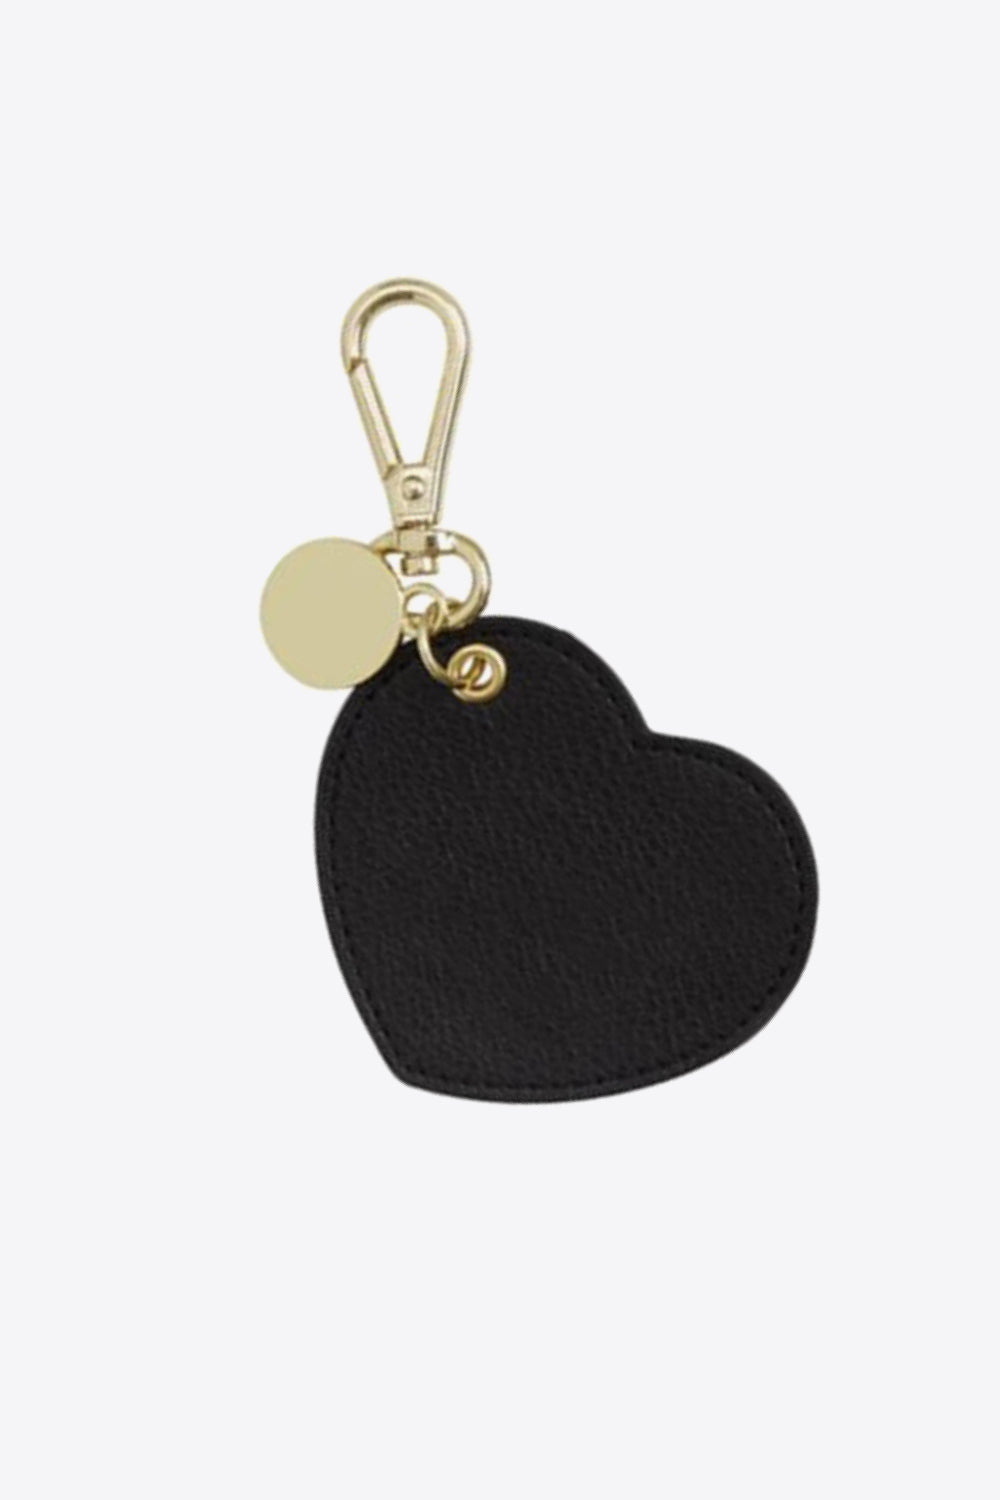 White Smoke Assorted 4-Pack Heart Shape PU Leather Keychain Key Chains